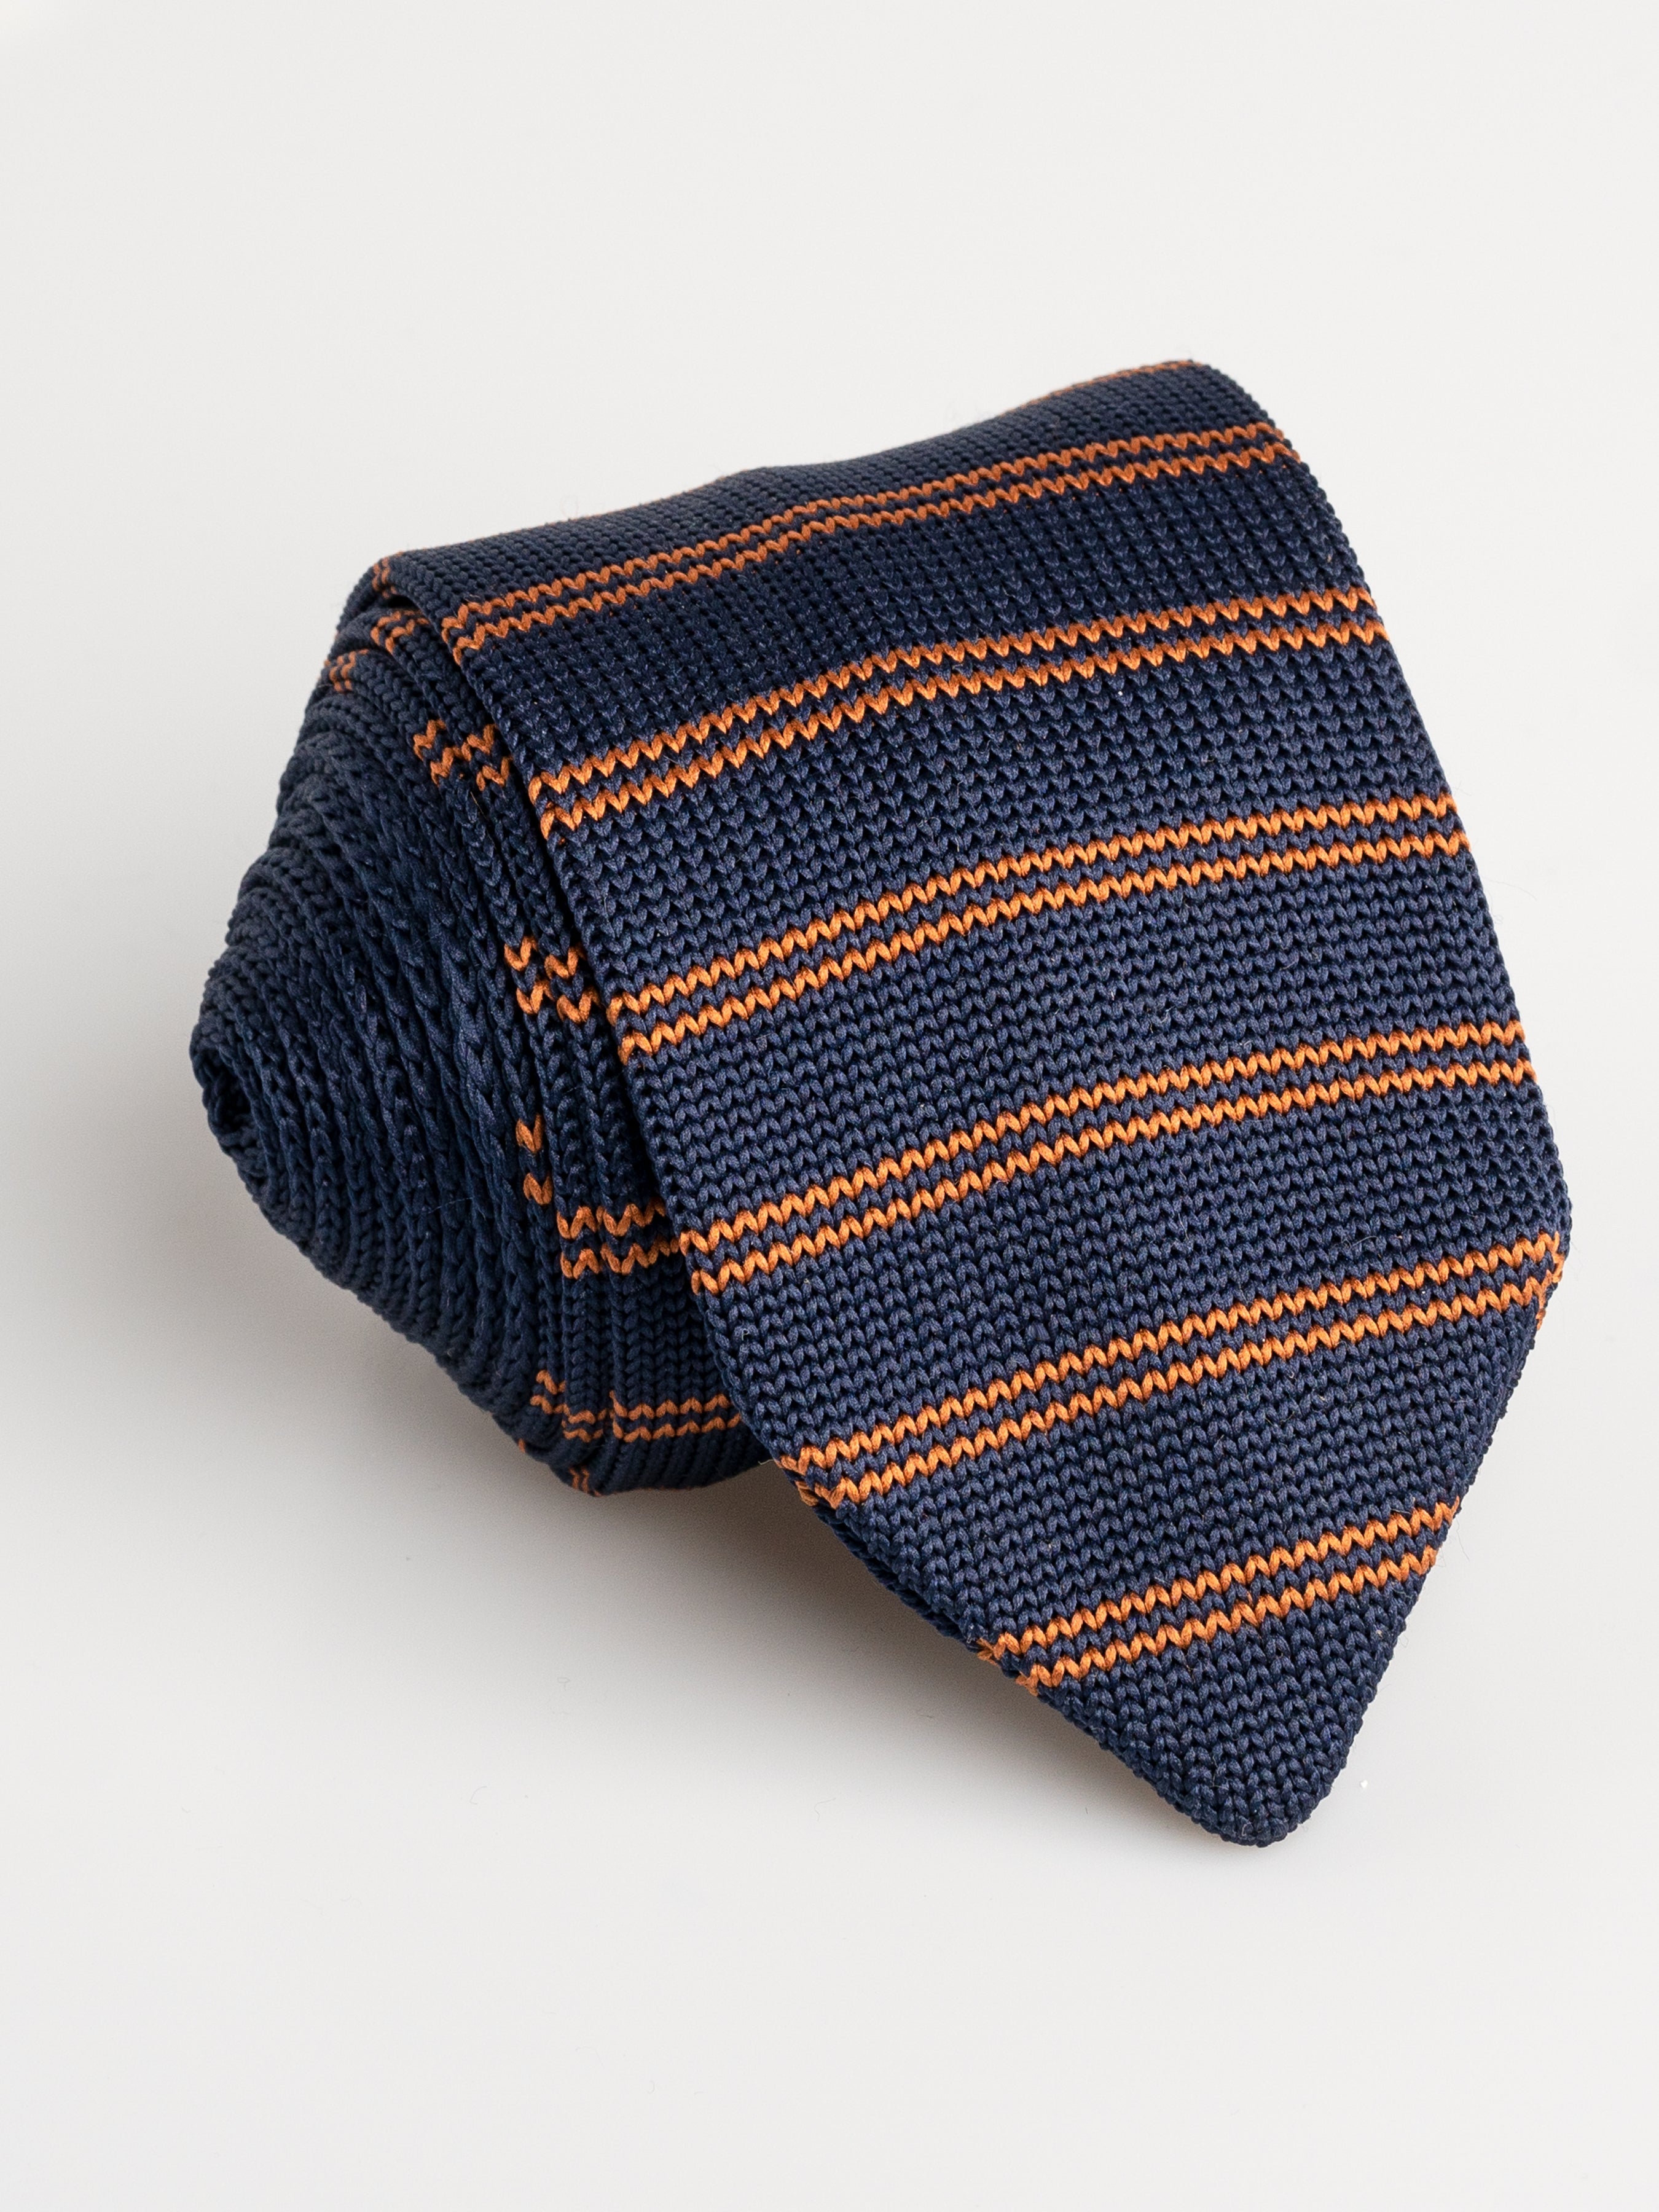 Knit Tie - Navy Blue With Orange Double Stripes